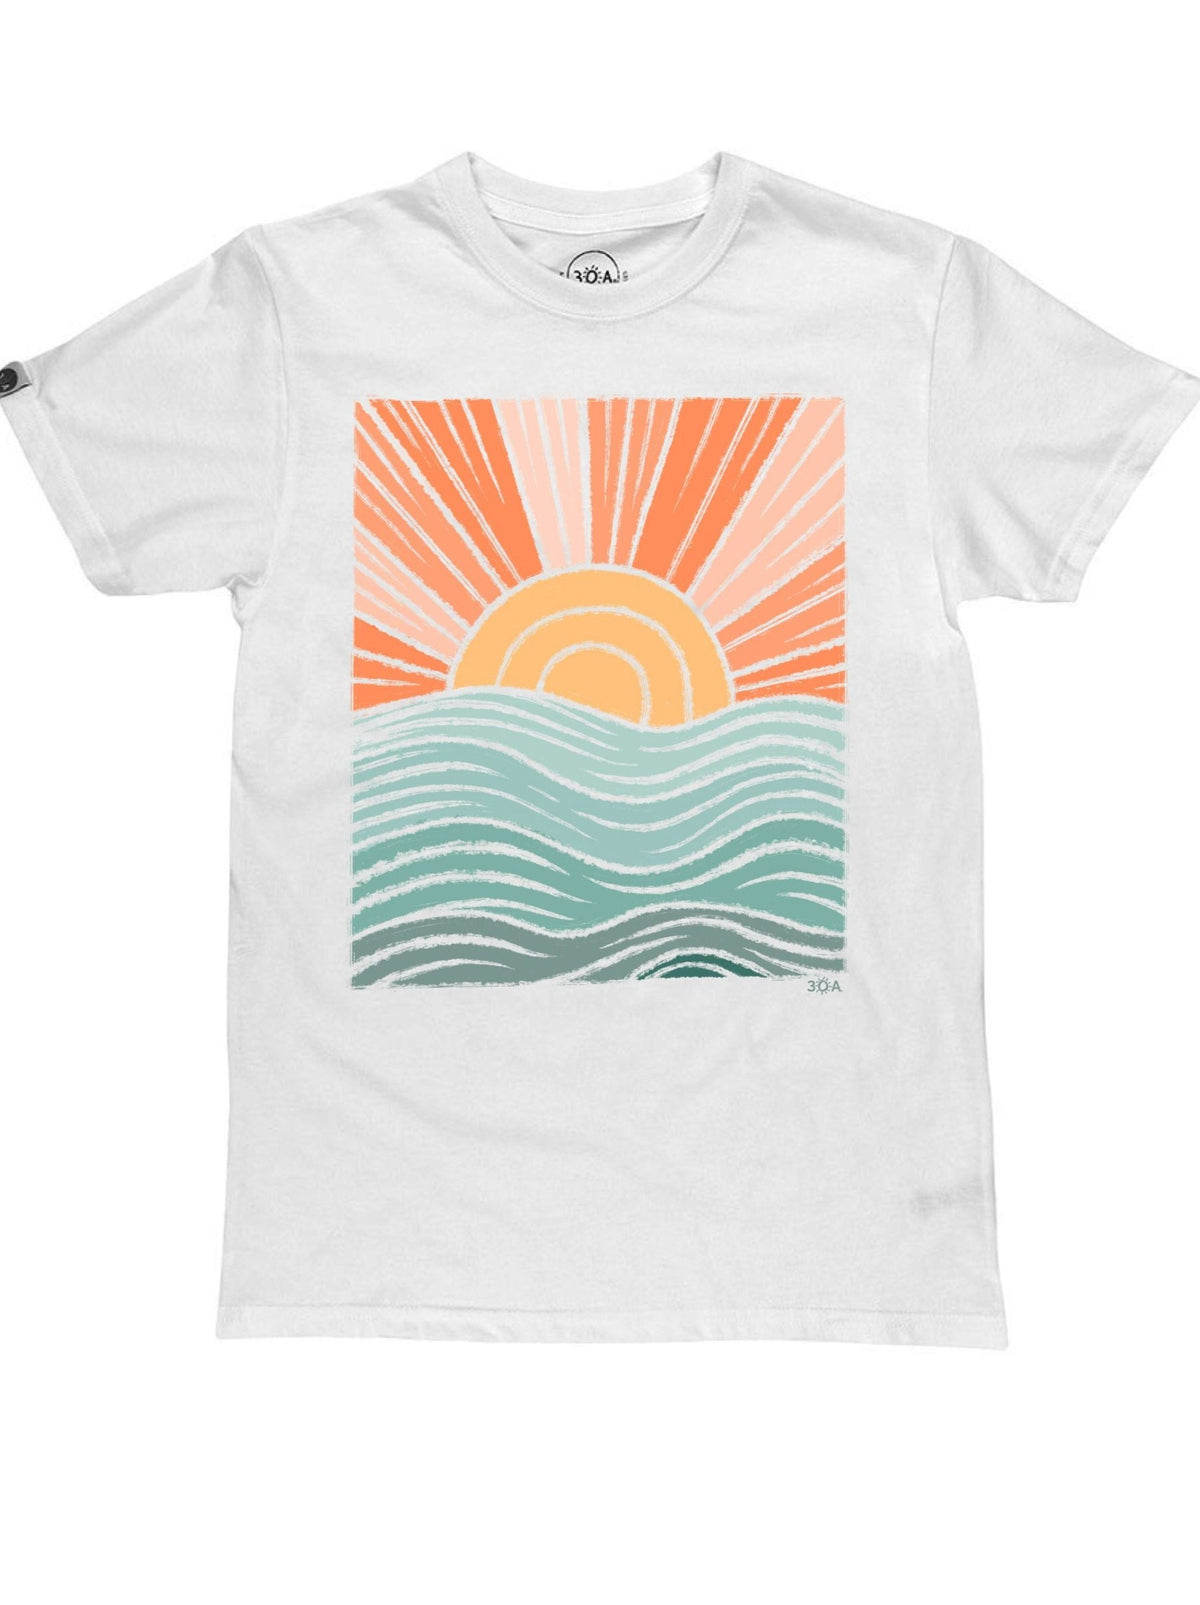 Watercolor Sunset Love T-Shirt